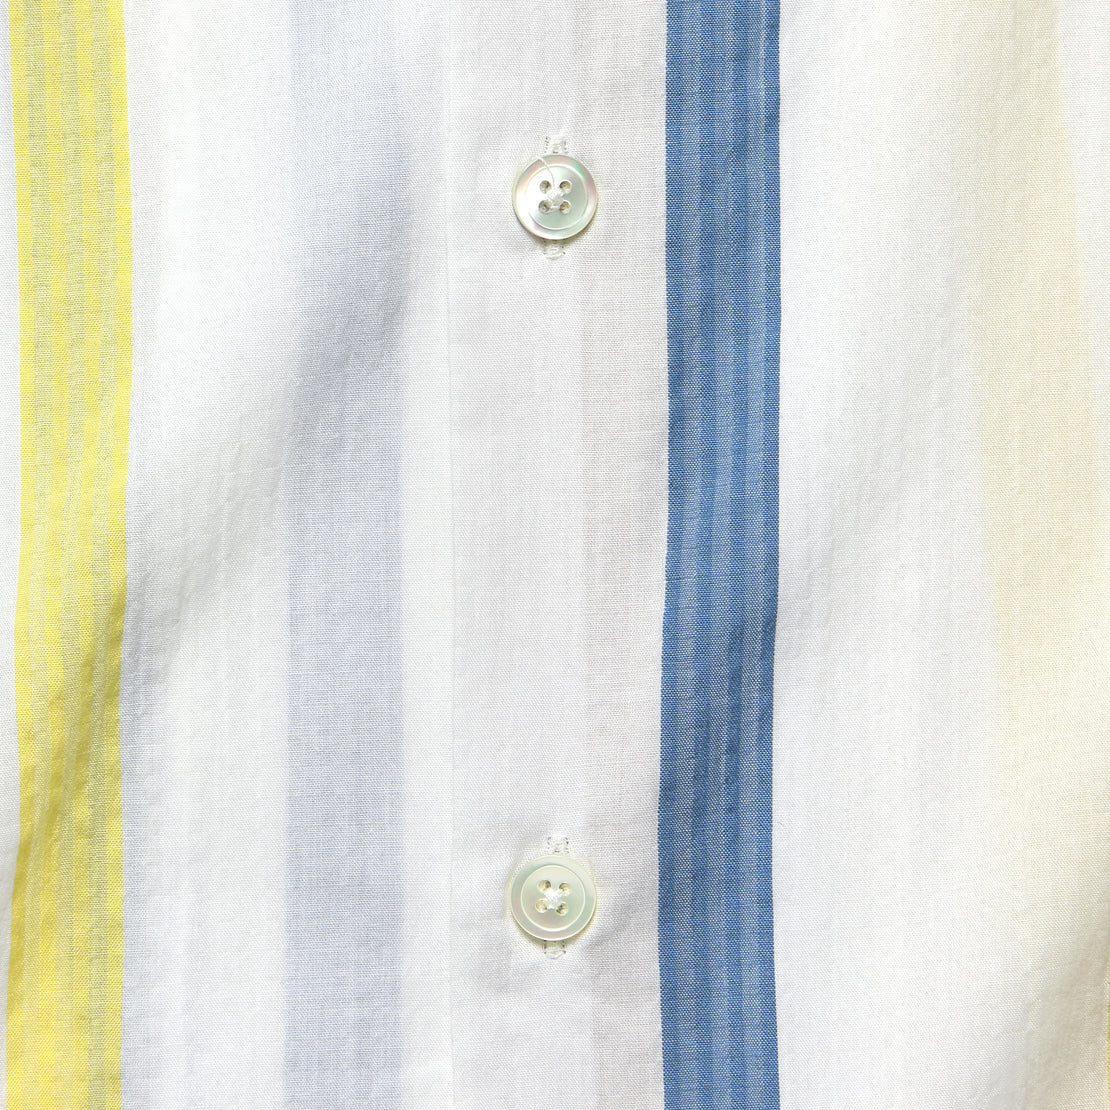 Riviera Stripe Shirt - White/Blue/Yellow - Portuguese Flannel - STAG Provisions - Tops - S/S Woven - Stripe